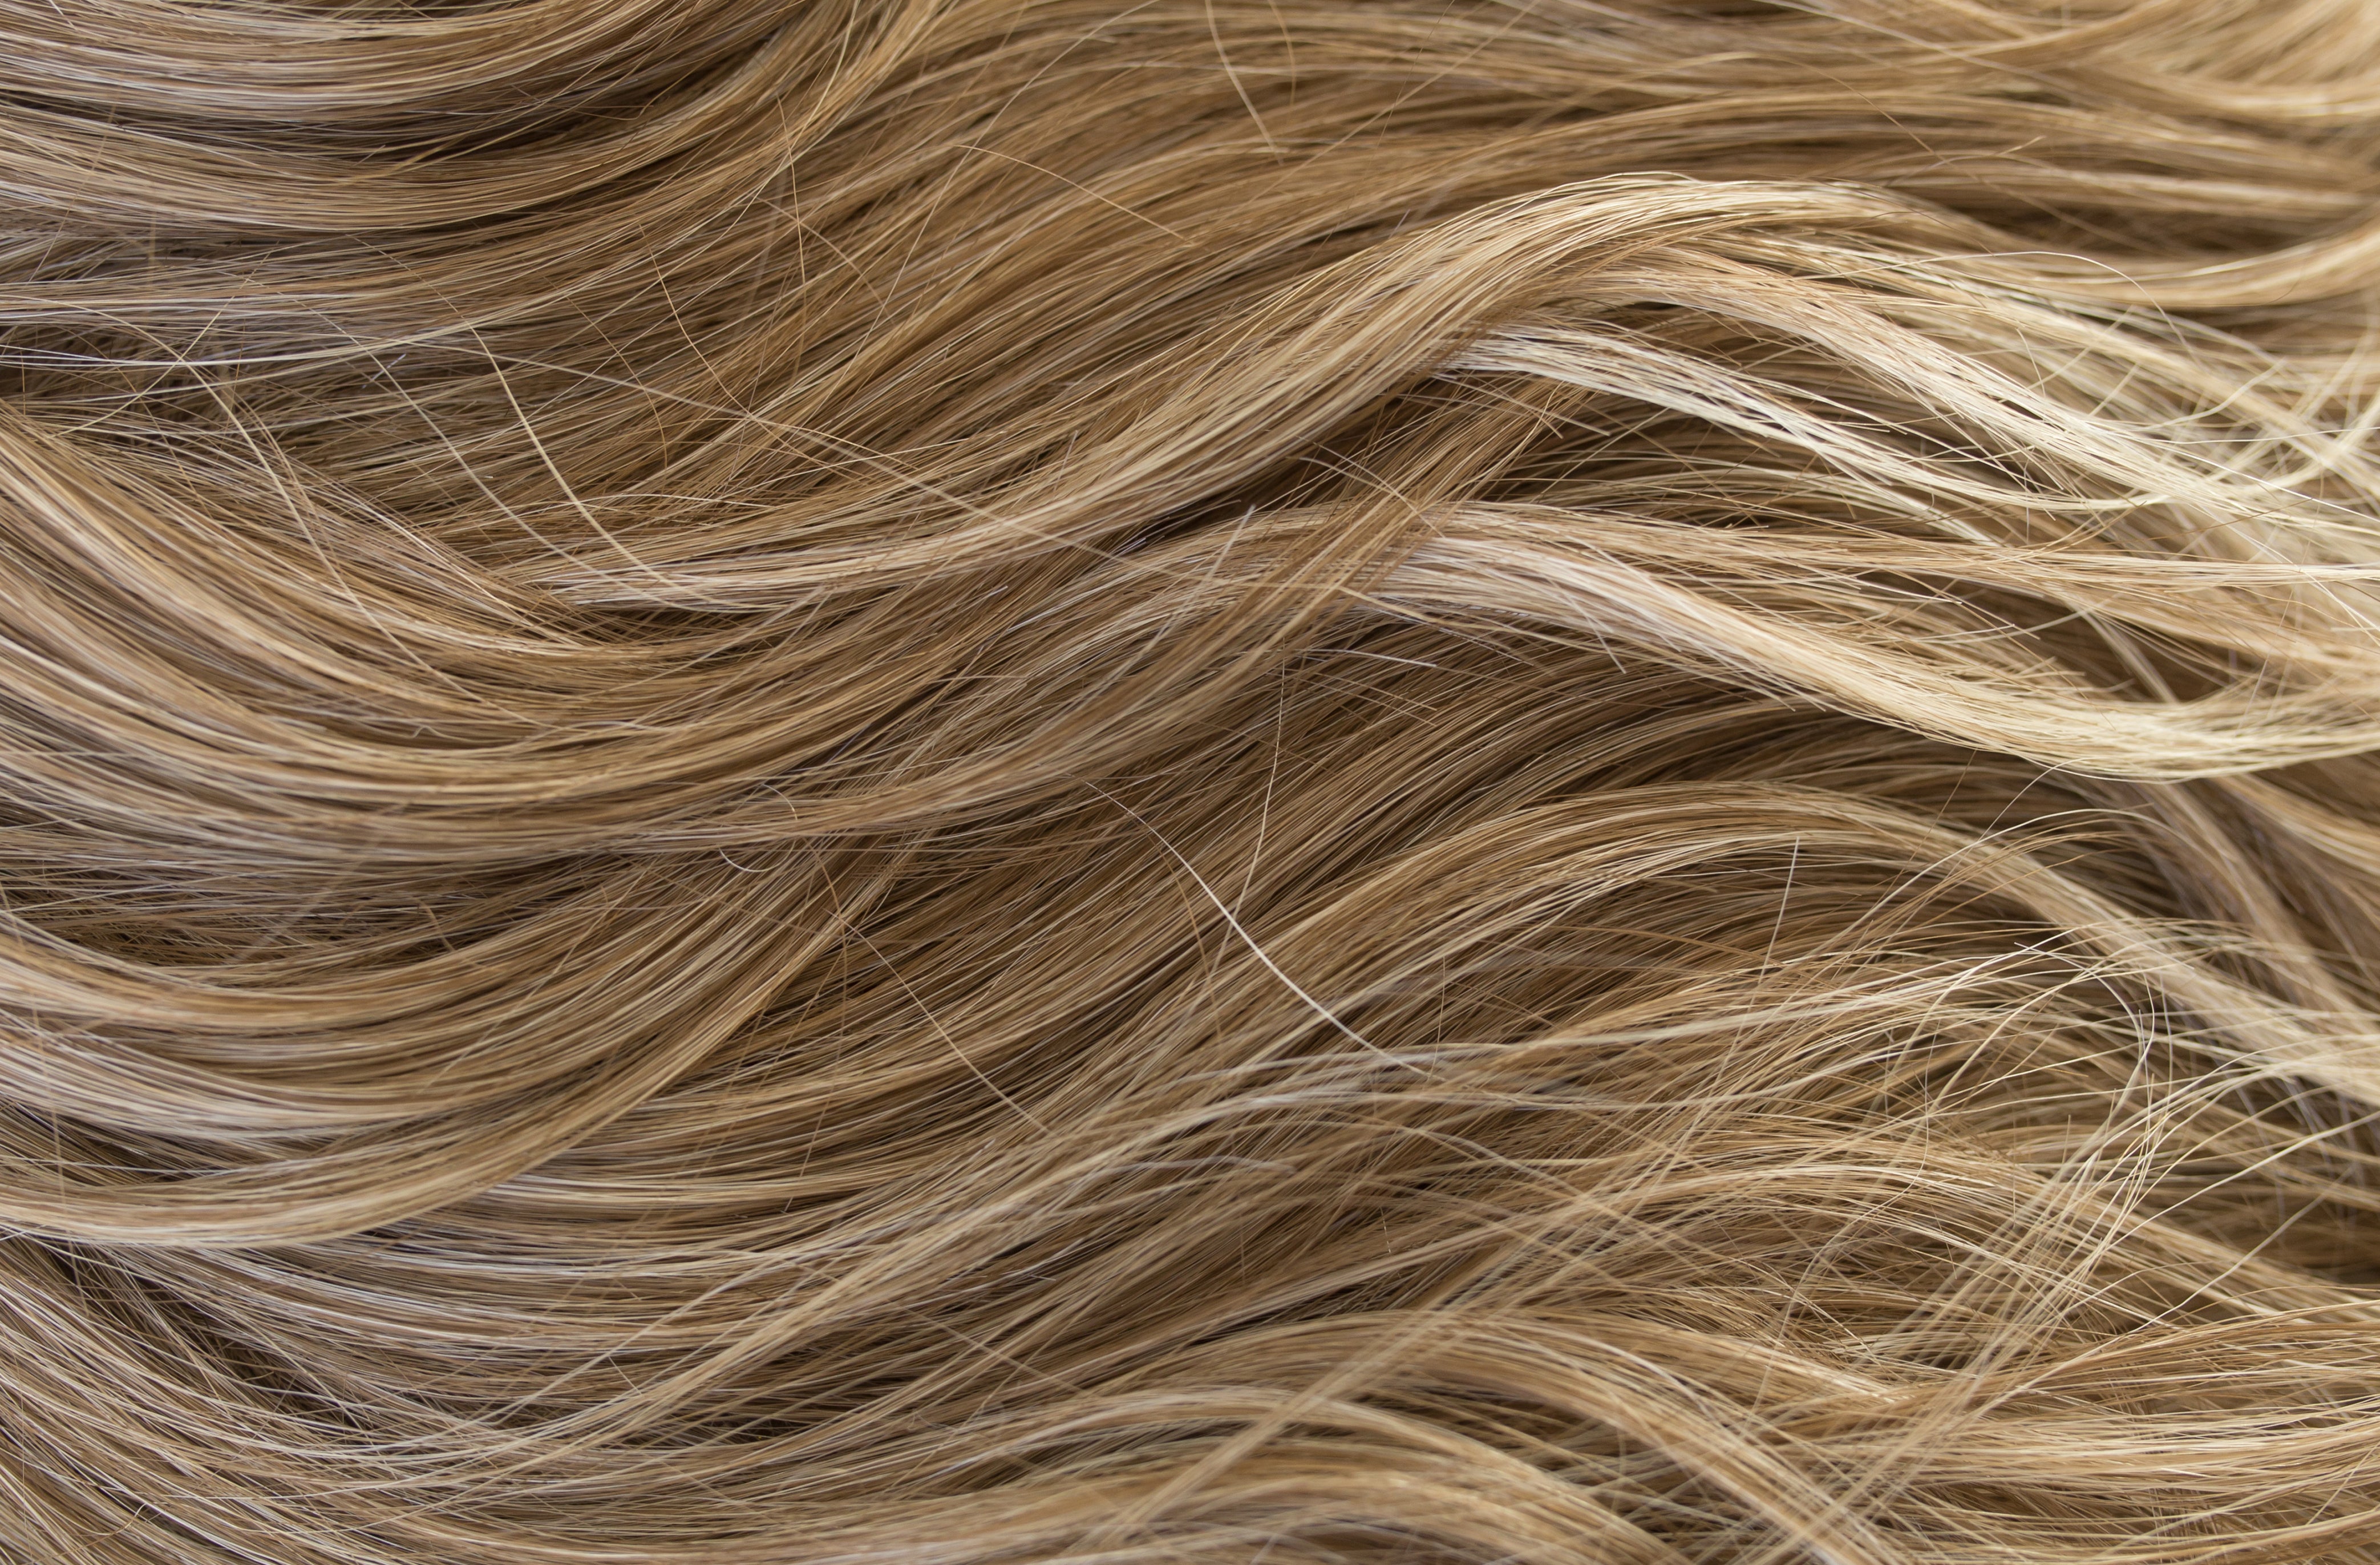 Rene of Paris Amore Collection - Brandi wig